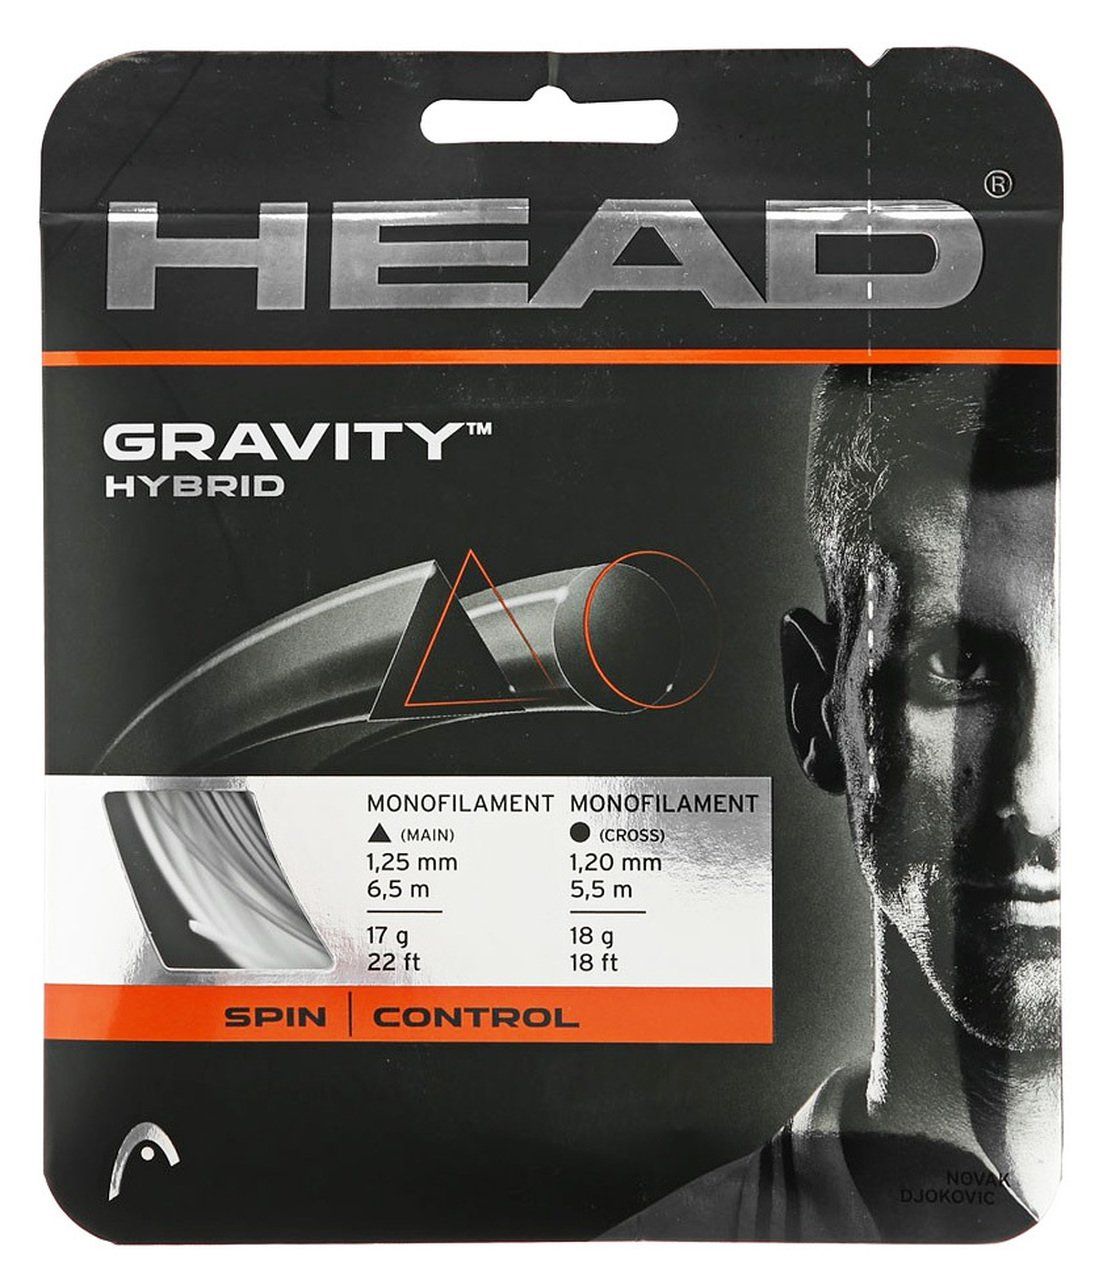 Head Gravity